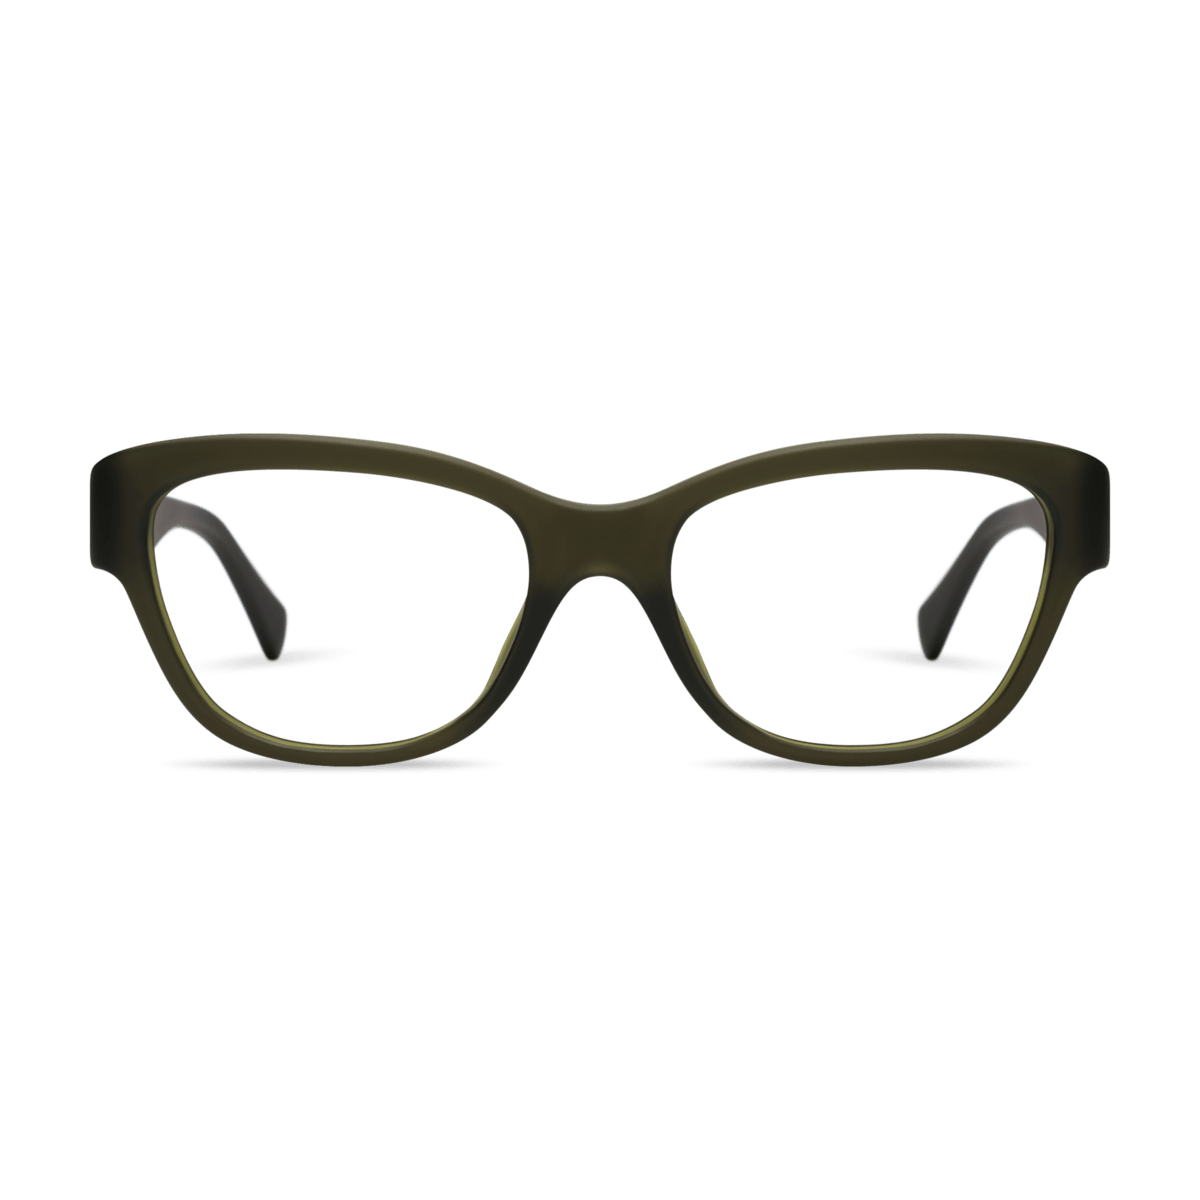 Milla Blue Light Eyeglasses LOOK OPTIC Forest Green +0.00 